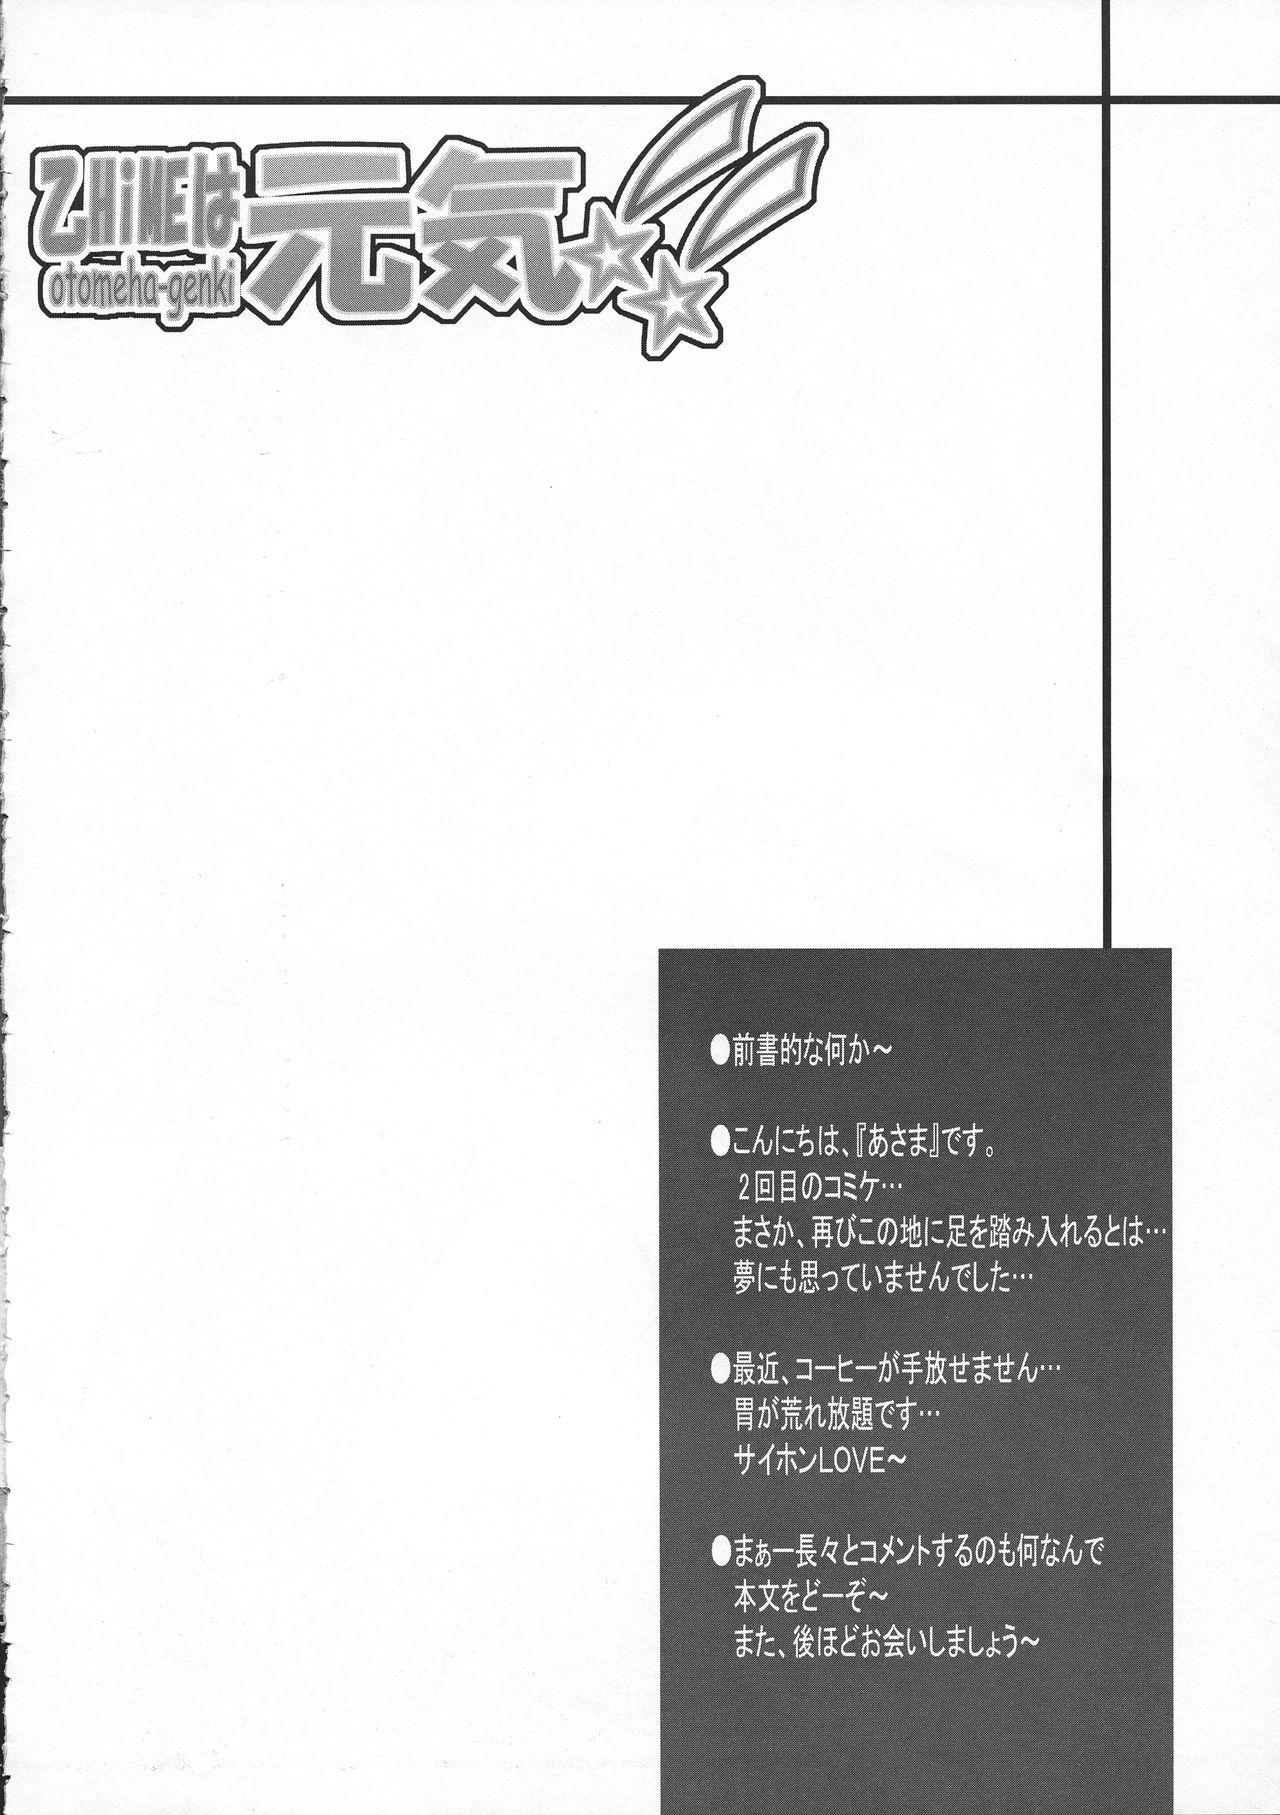 Hot Blow Jobs Otome wa Genki!! - Mai-otome Flexible - Page 4